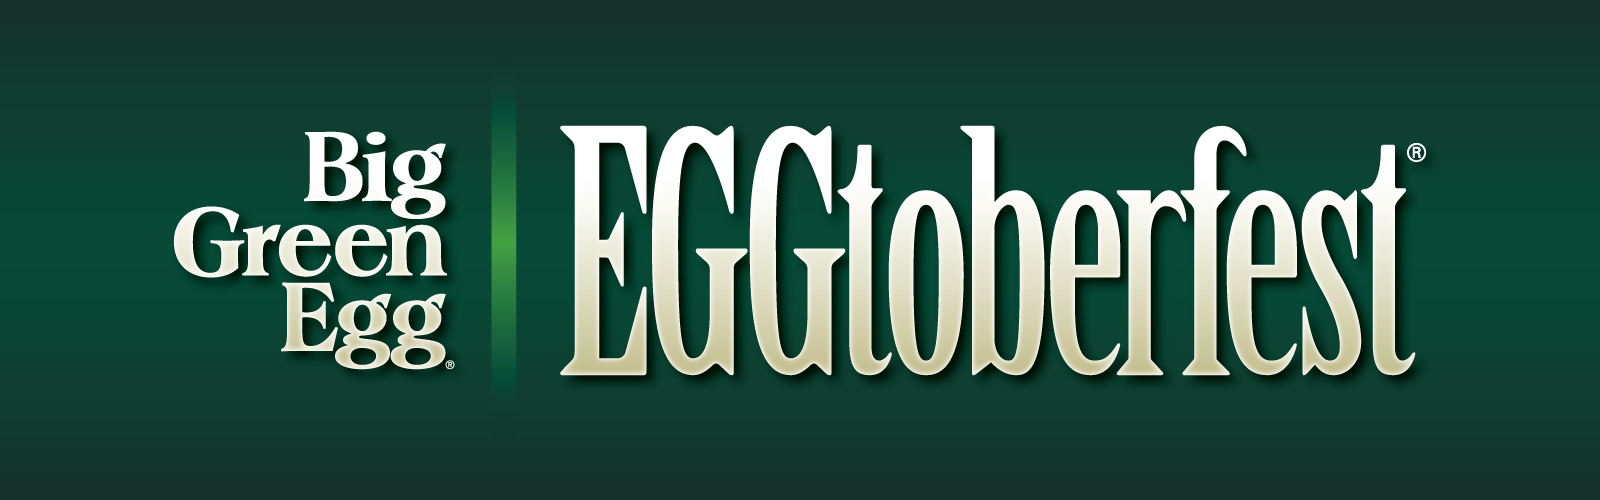 EGGtoberfest Banner